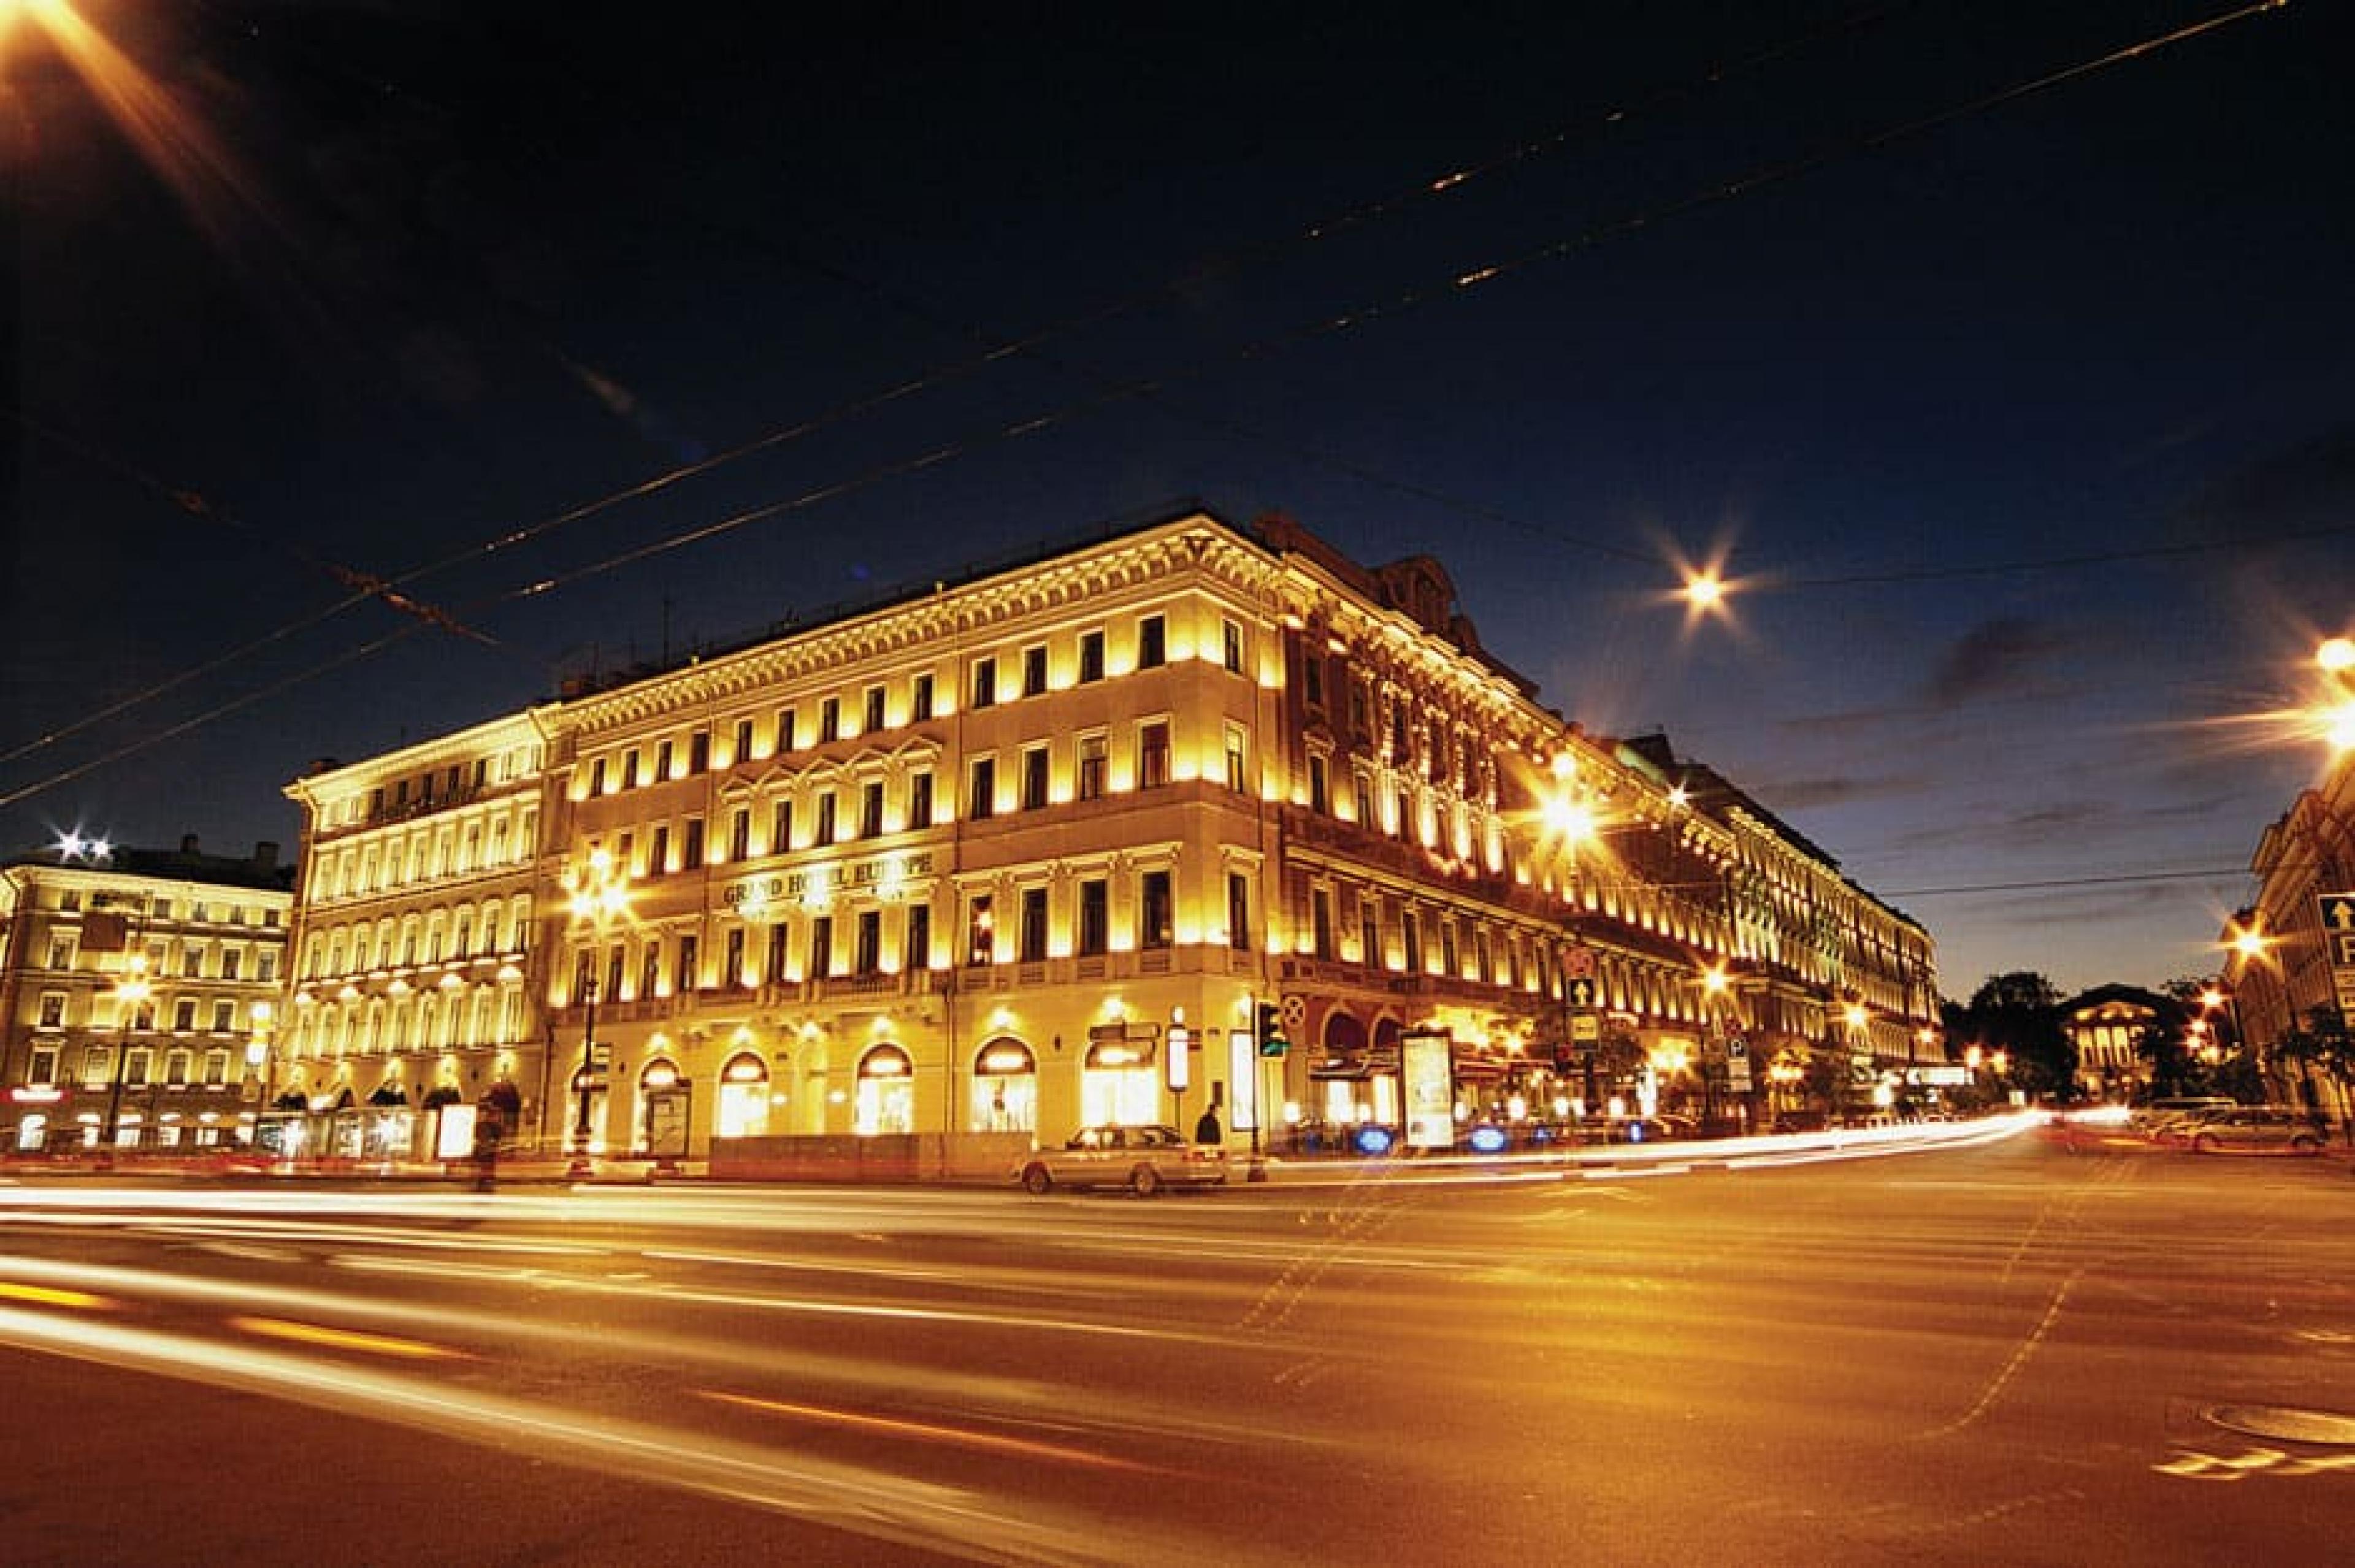 Facade - Belmond Grand Hotel Europe,St. Petersburg, Russia